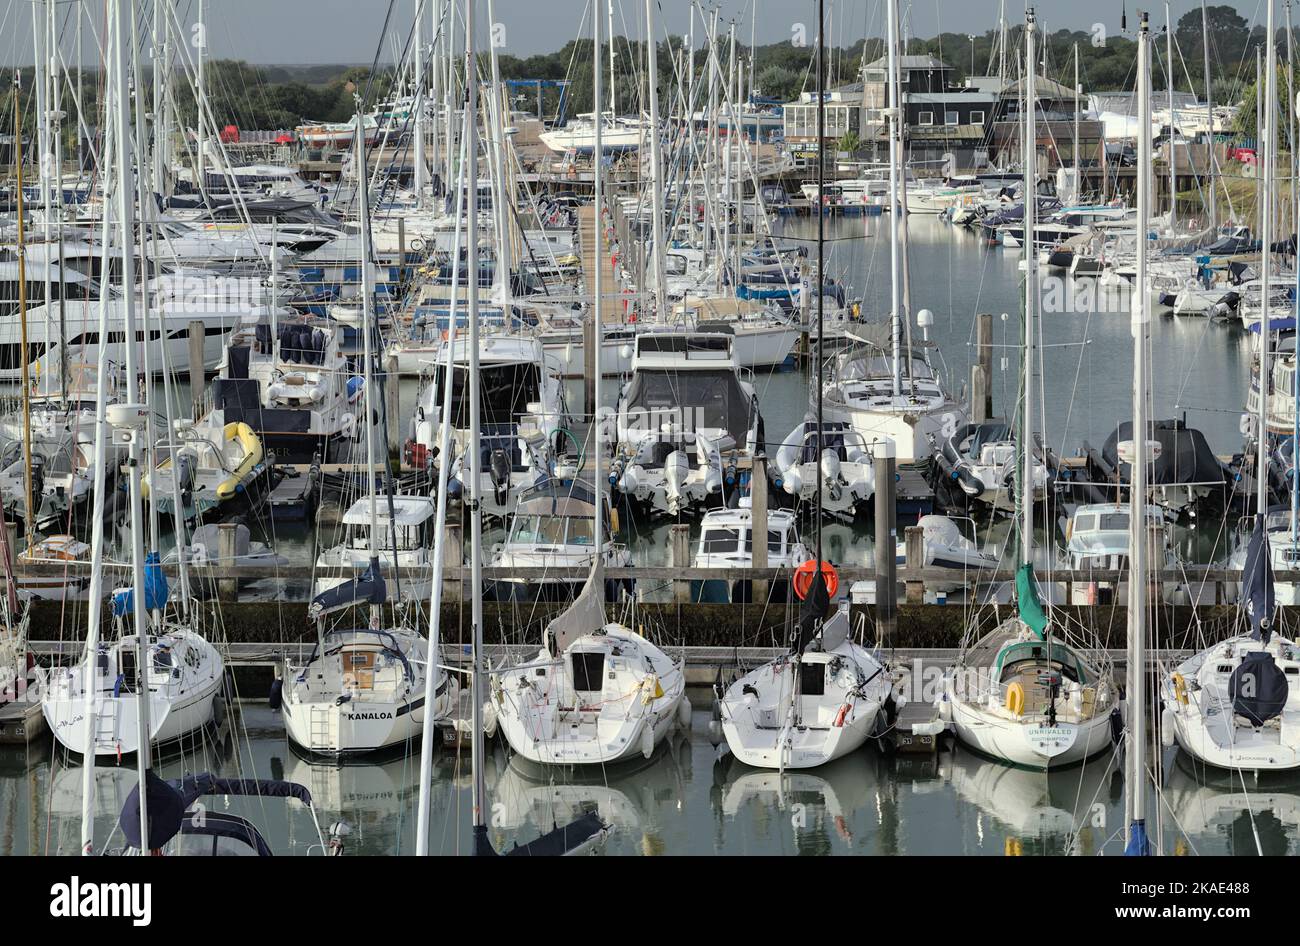 Boats, Yachts, Sailing Boats Moored IN Yacht Haven Marina, Lymington UK Stock Photo